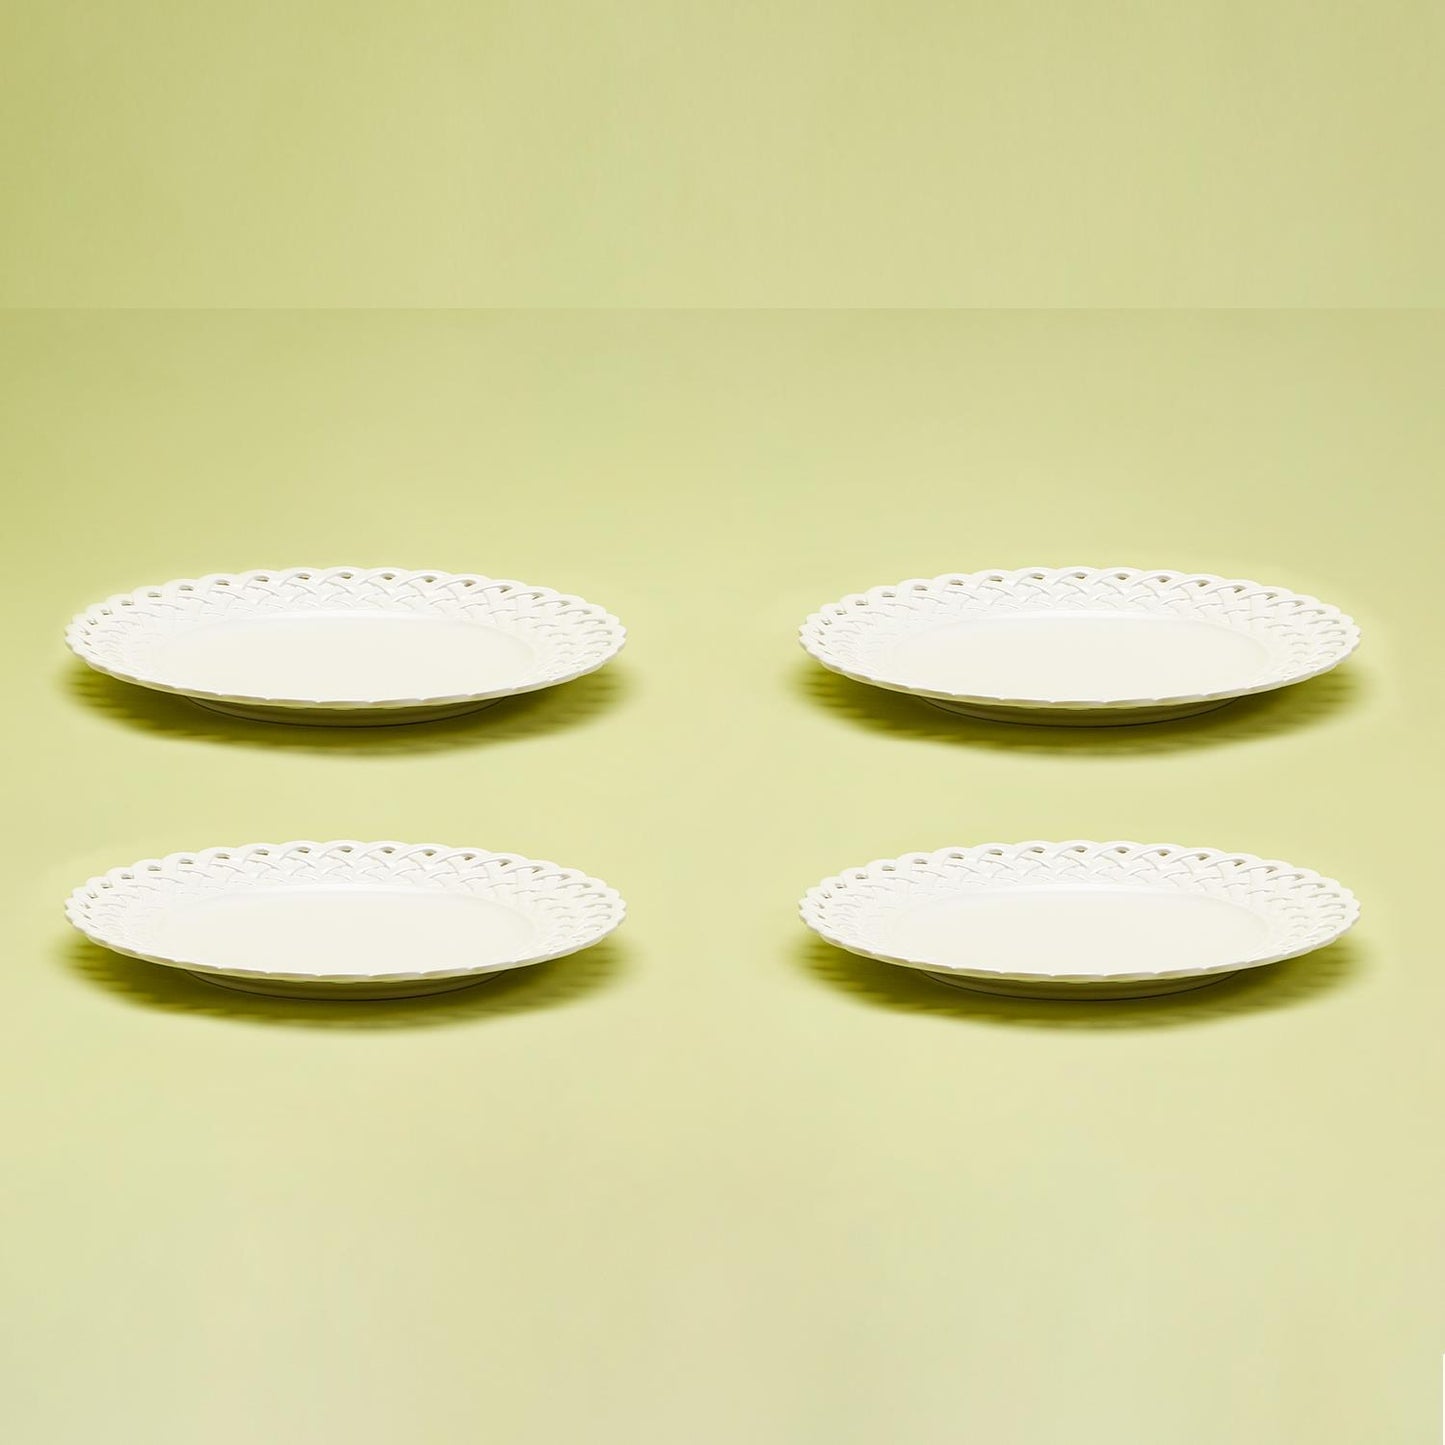 Lattice Dinner Plates- Set of Four